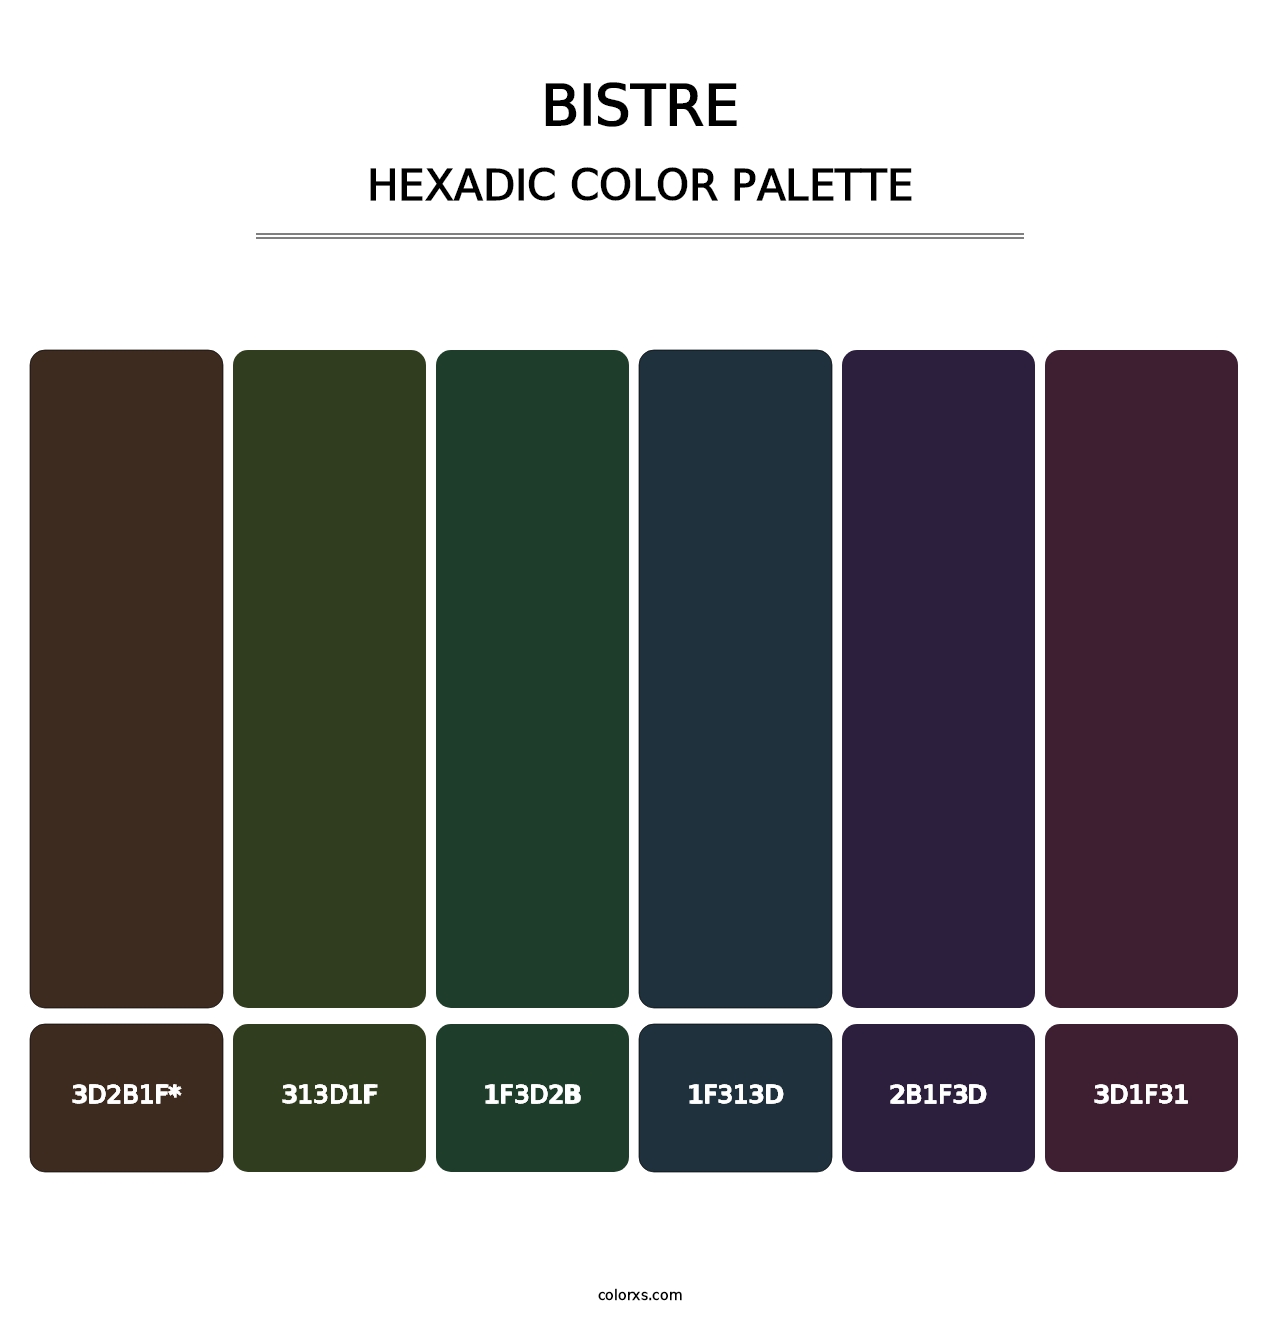 Bistre - Hexadic Color Palette